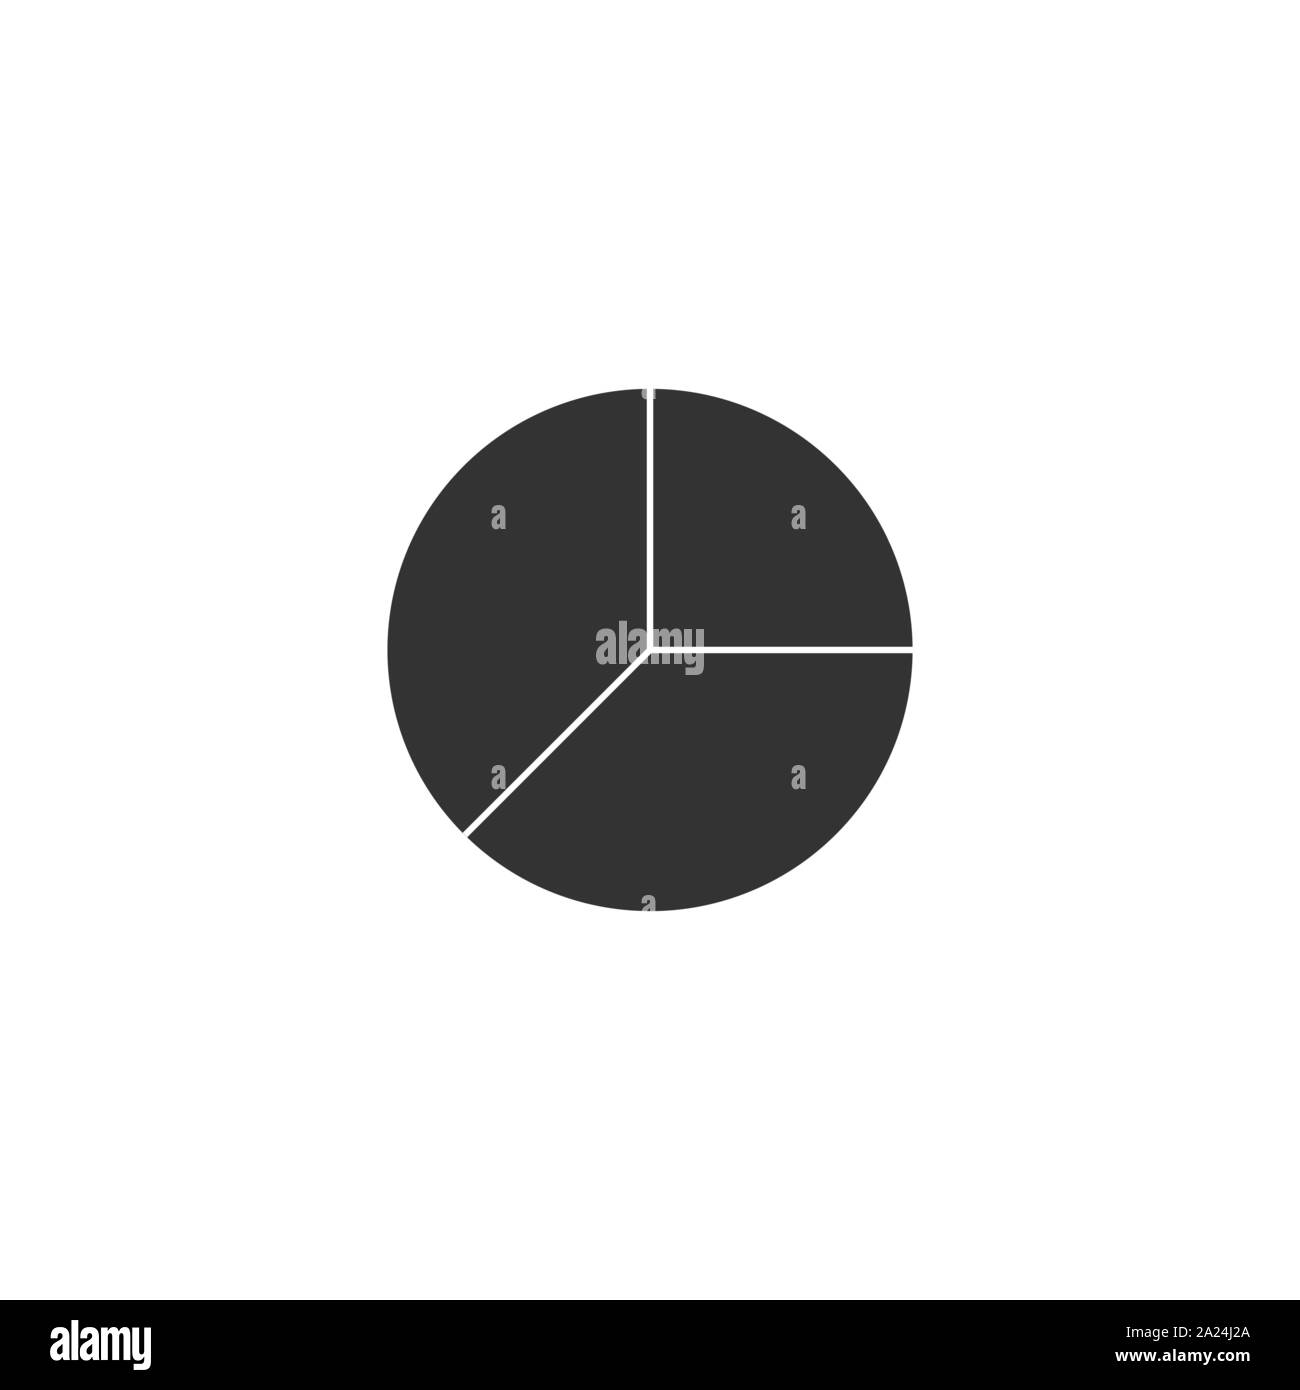 Circular chart, diagram, pie chart icon. Vector illustration, flat design. Stock Vector